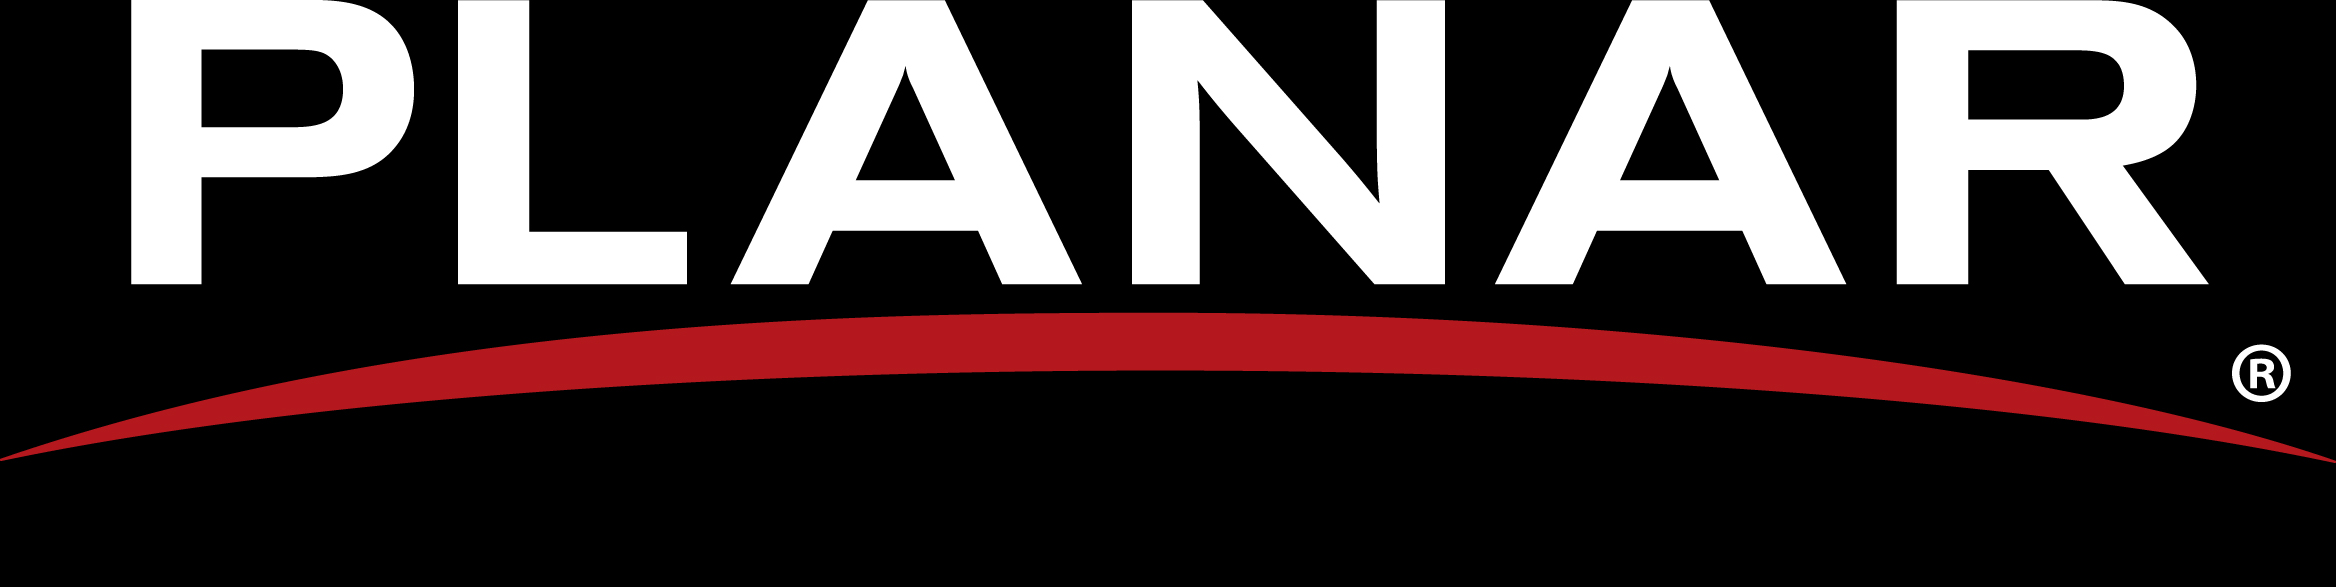 Reversed Planar EPS logo, red arc